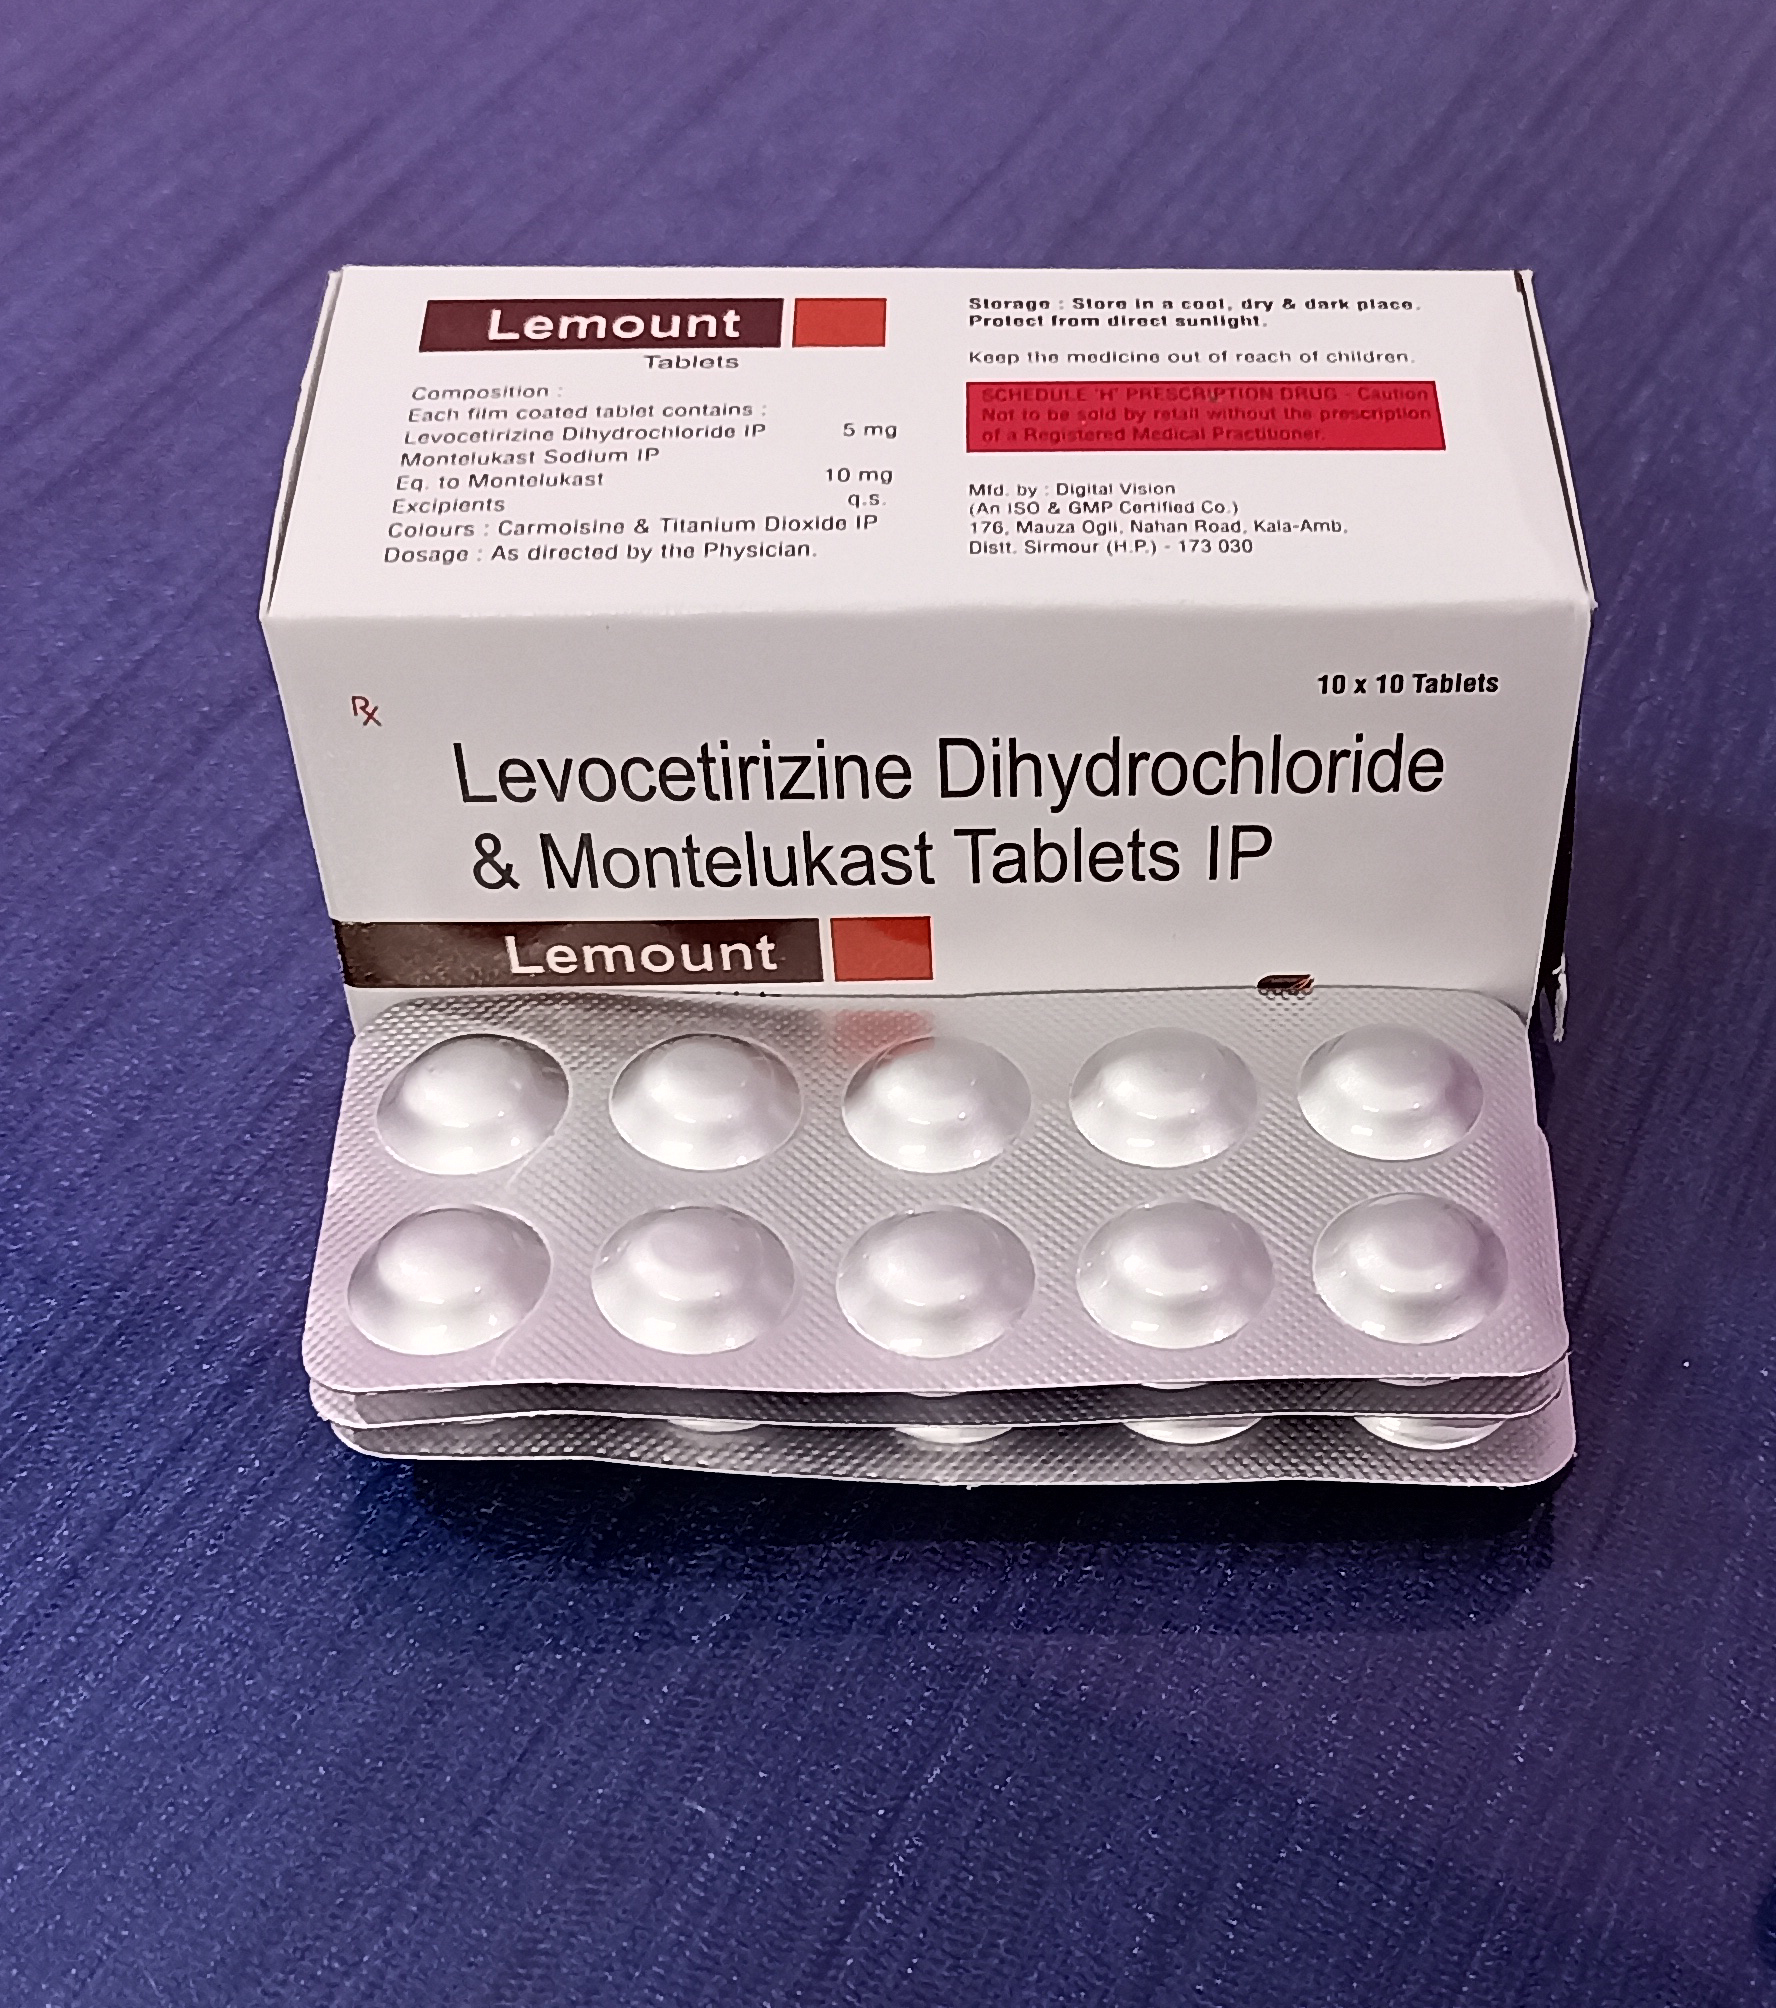 Levocetirizine Dihydrochloride & Montelukast